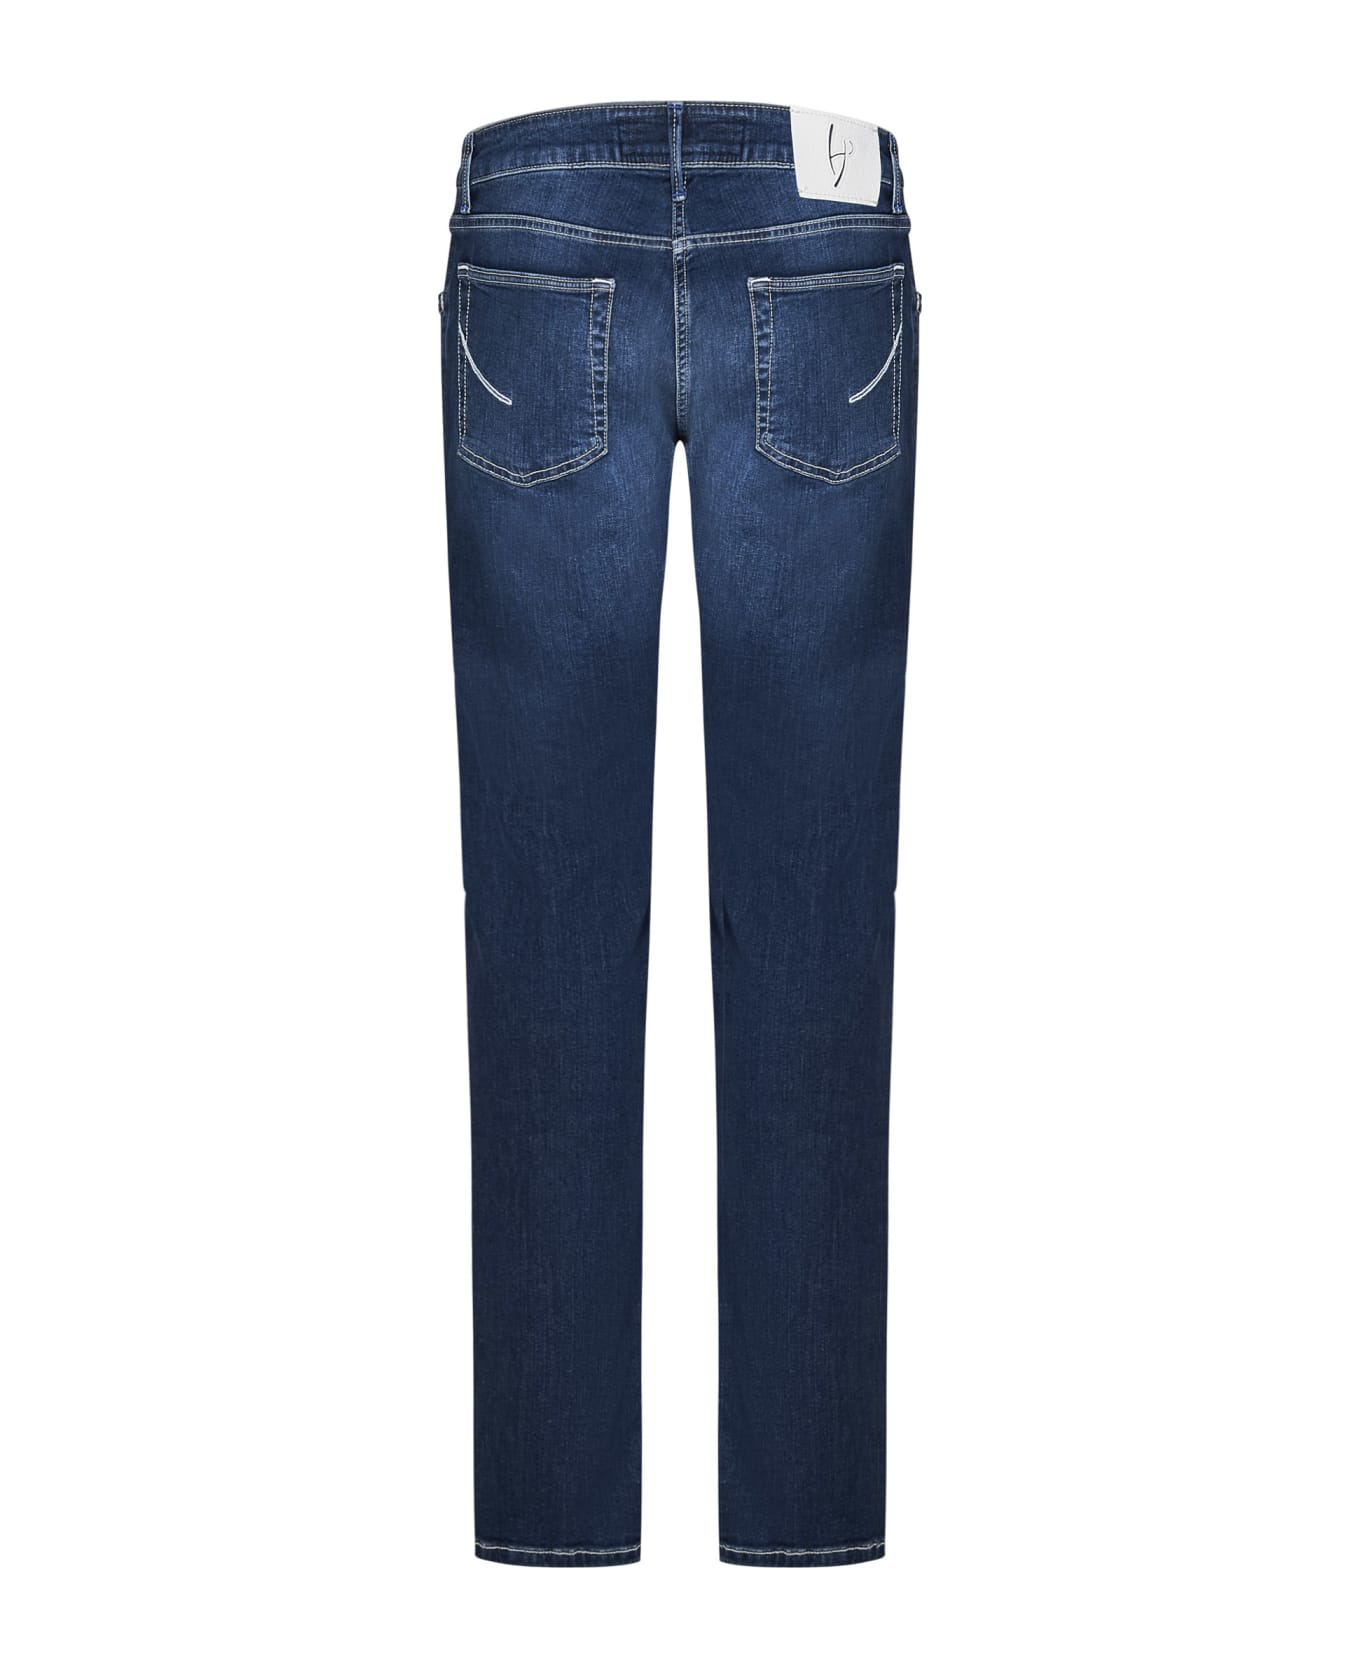 Hand Picked Orvieto Jeans - DENIM BLUE